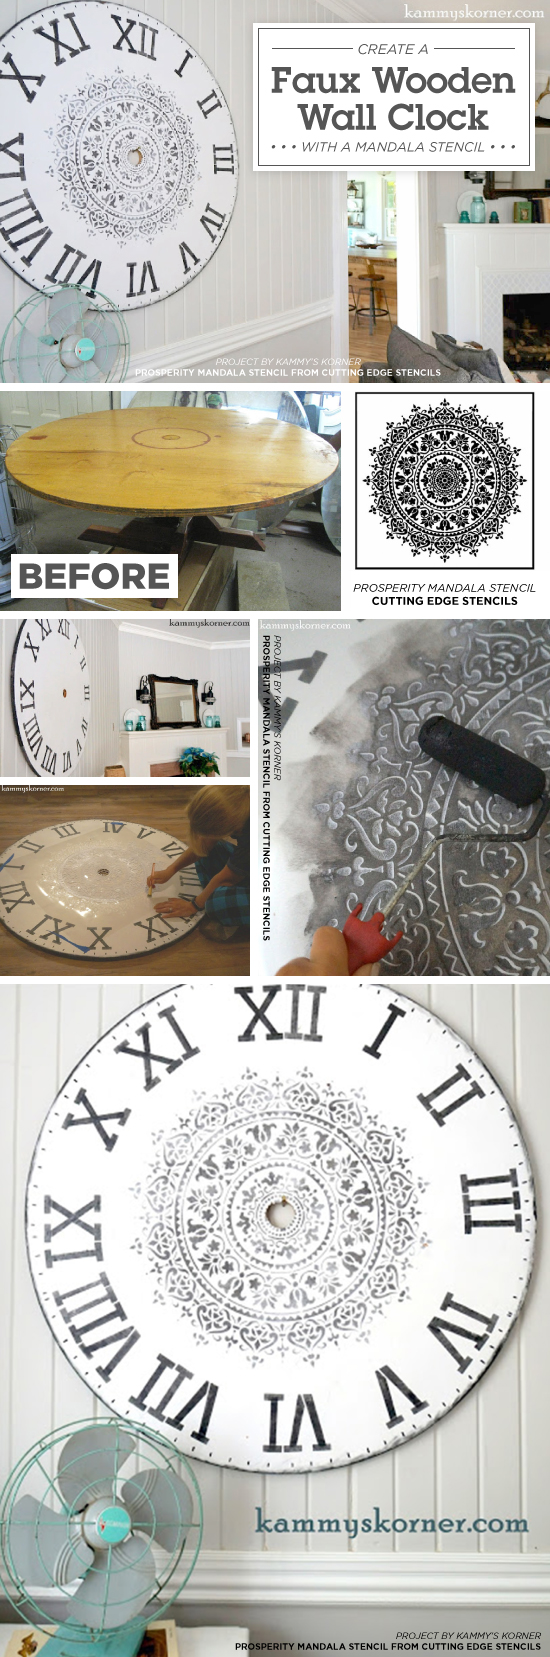 Learn how to stencil the Prosperity Mandala Stencil from Cutting Edge Stencils on a wooden faux wall clock. http://www.cuttingedgestencils.com/prosperity-mandala-stencil-yoga-mandala-stencils-designs.html